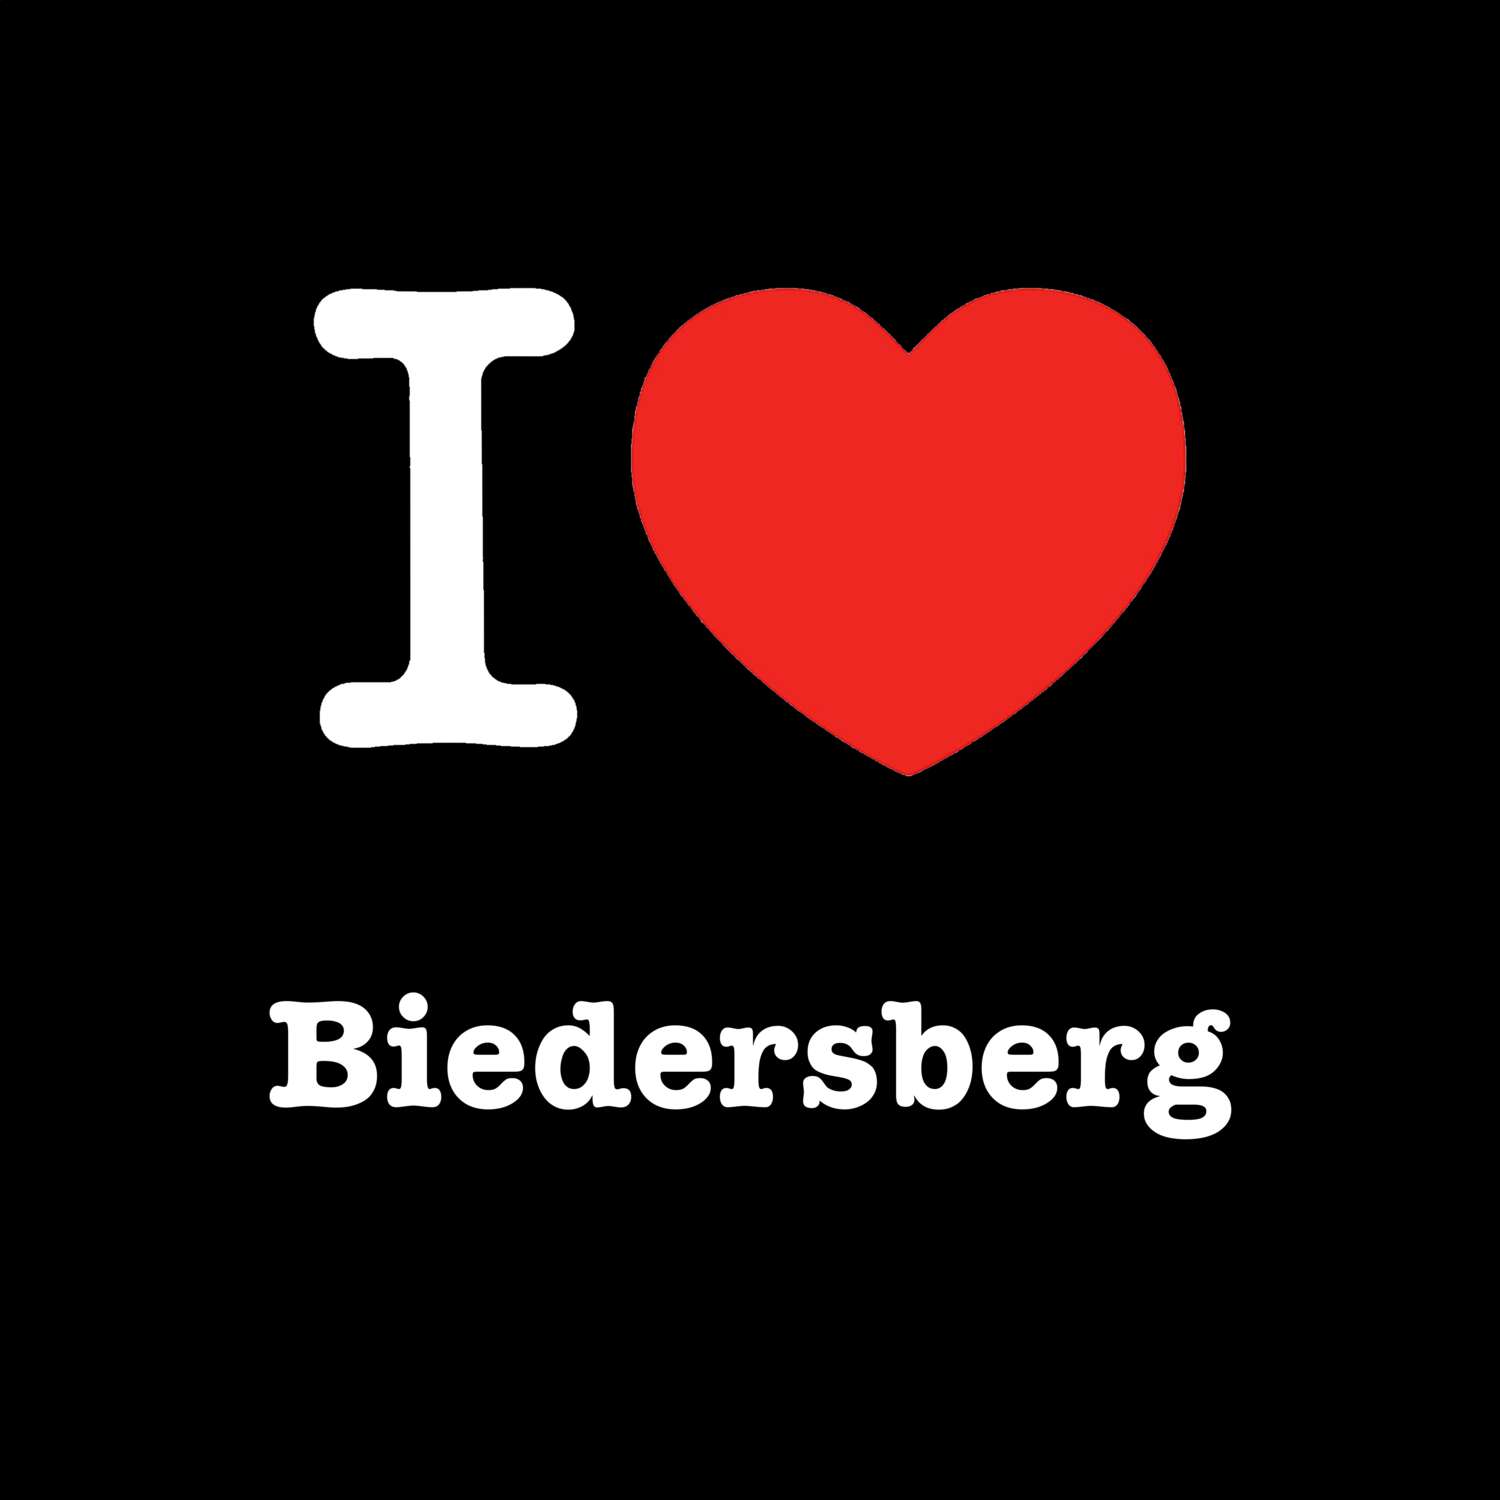 Biedersberg T-Shirt »I love«